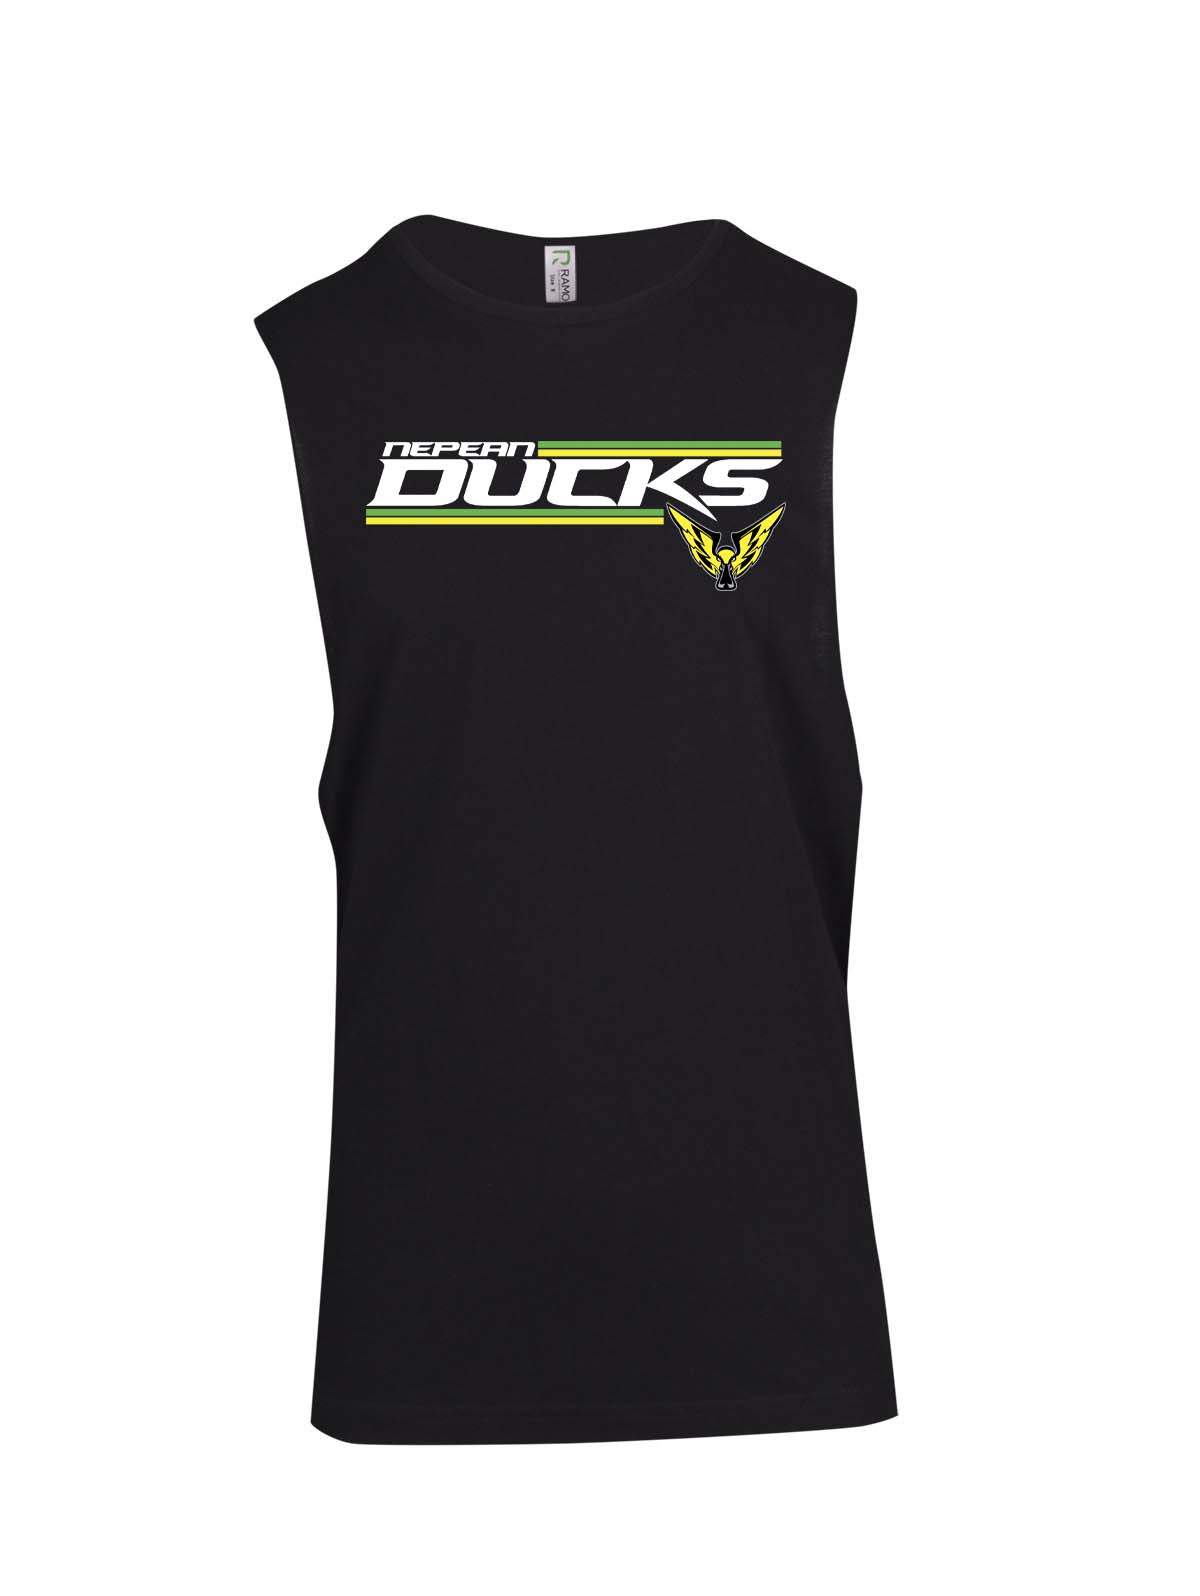 Nepean Ducks Striped Logo Ladies Muscle Tee